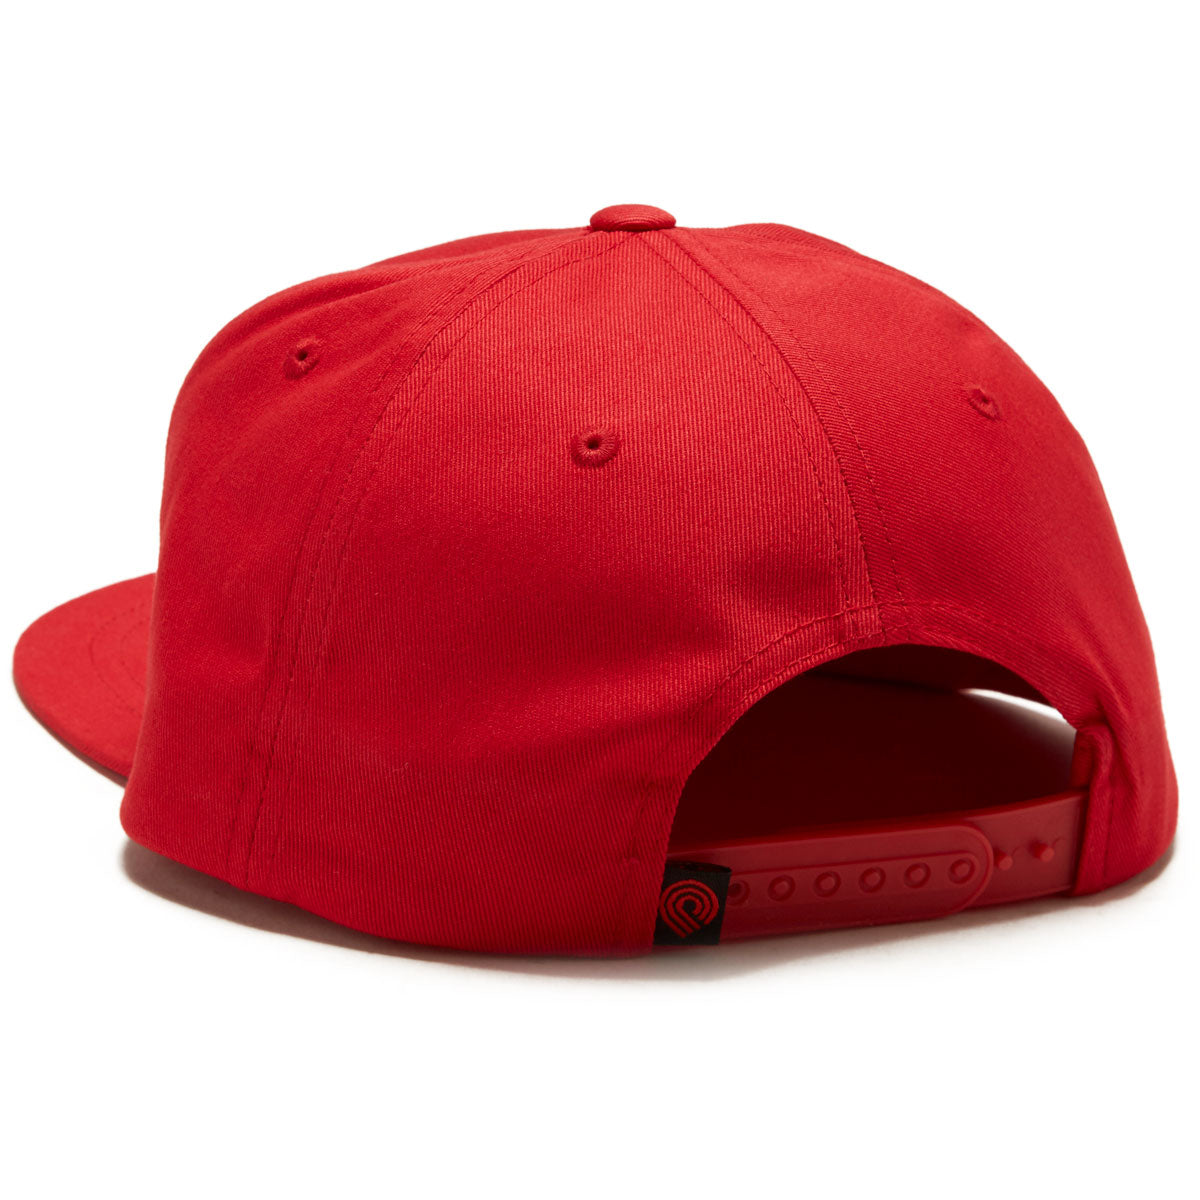 Powell-Peralta Vato Rat Snapback Hat - Red image 2